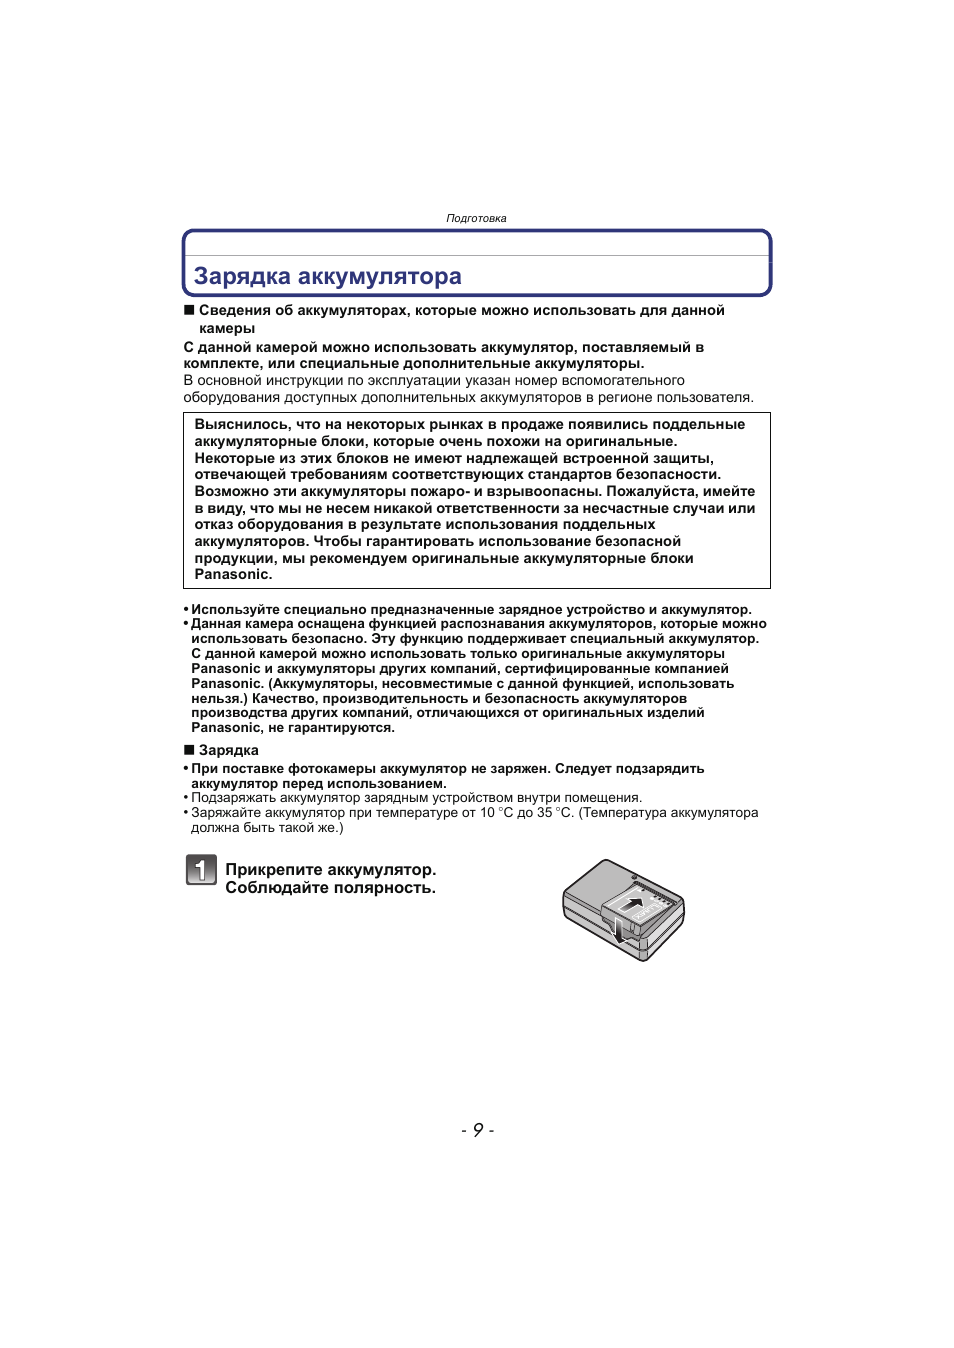 Подготовка, Зарядка аккумулятора | Инструкция по эксплуатации Panasonic KX-MC6020 | Страница 9 / 130